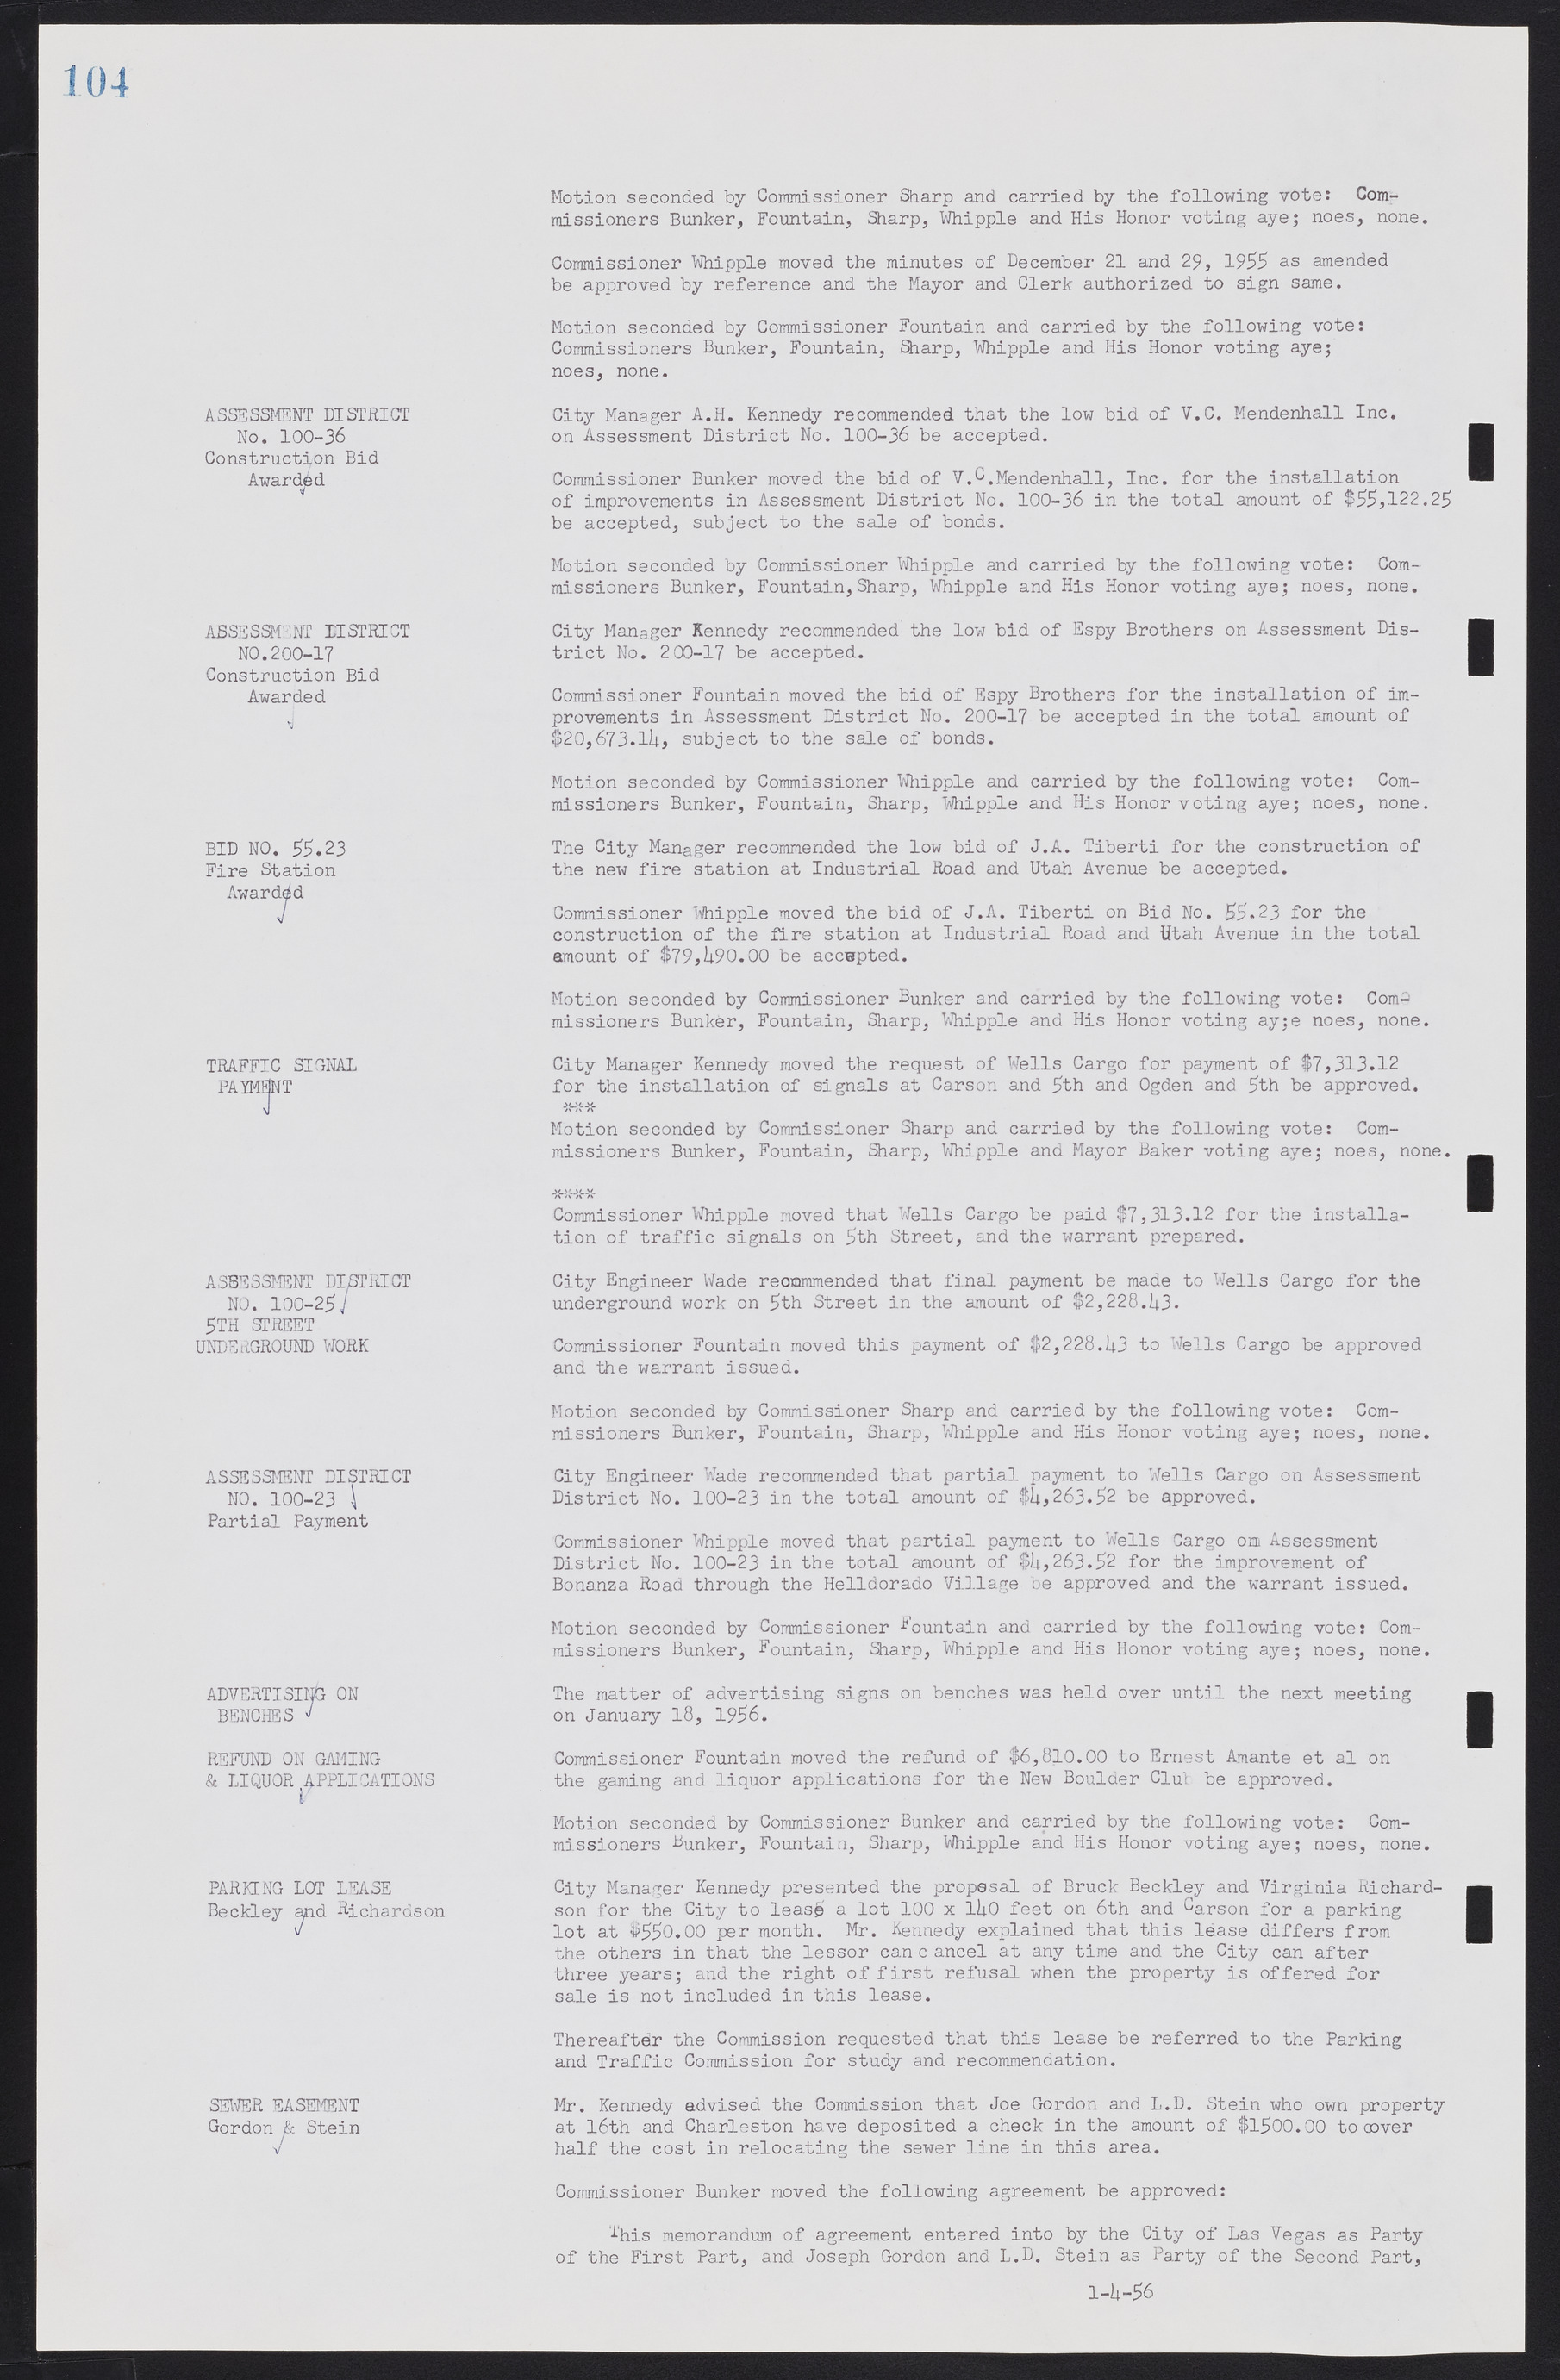 Las Vegas City Commission Minutes, September 21, 1955 to November 20, 1957, lvc000010-114